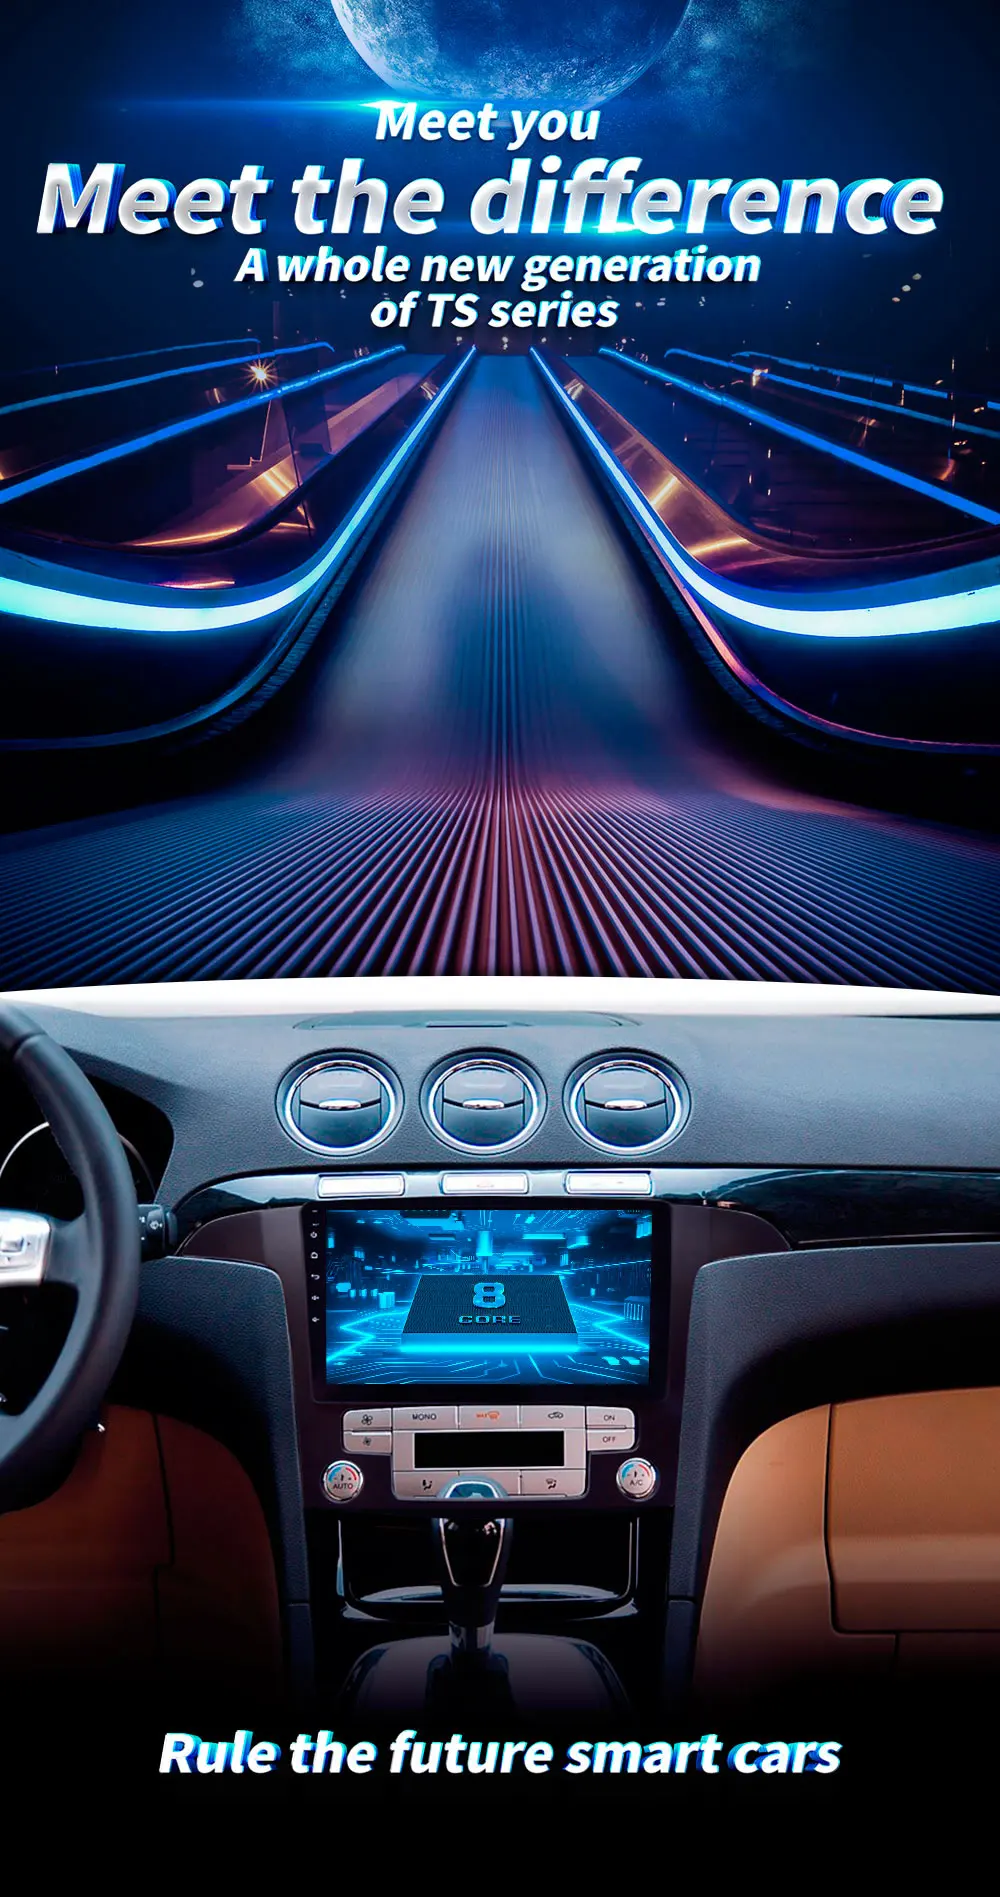 4G LTE 32G rom android 9,0 Автомобильный gps мультимедийный видео радио плеер dash для Ford galaxy Max C-Max автомобильный навигатор стерео